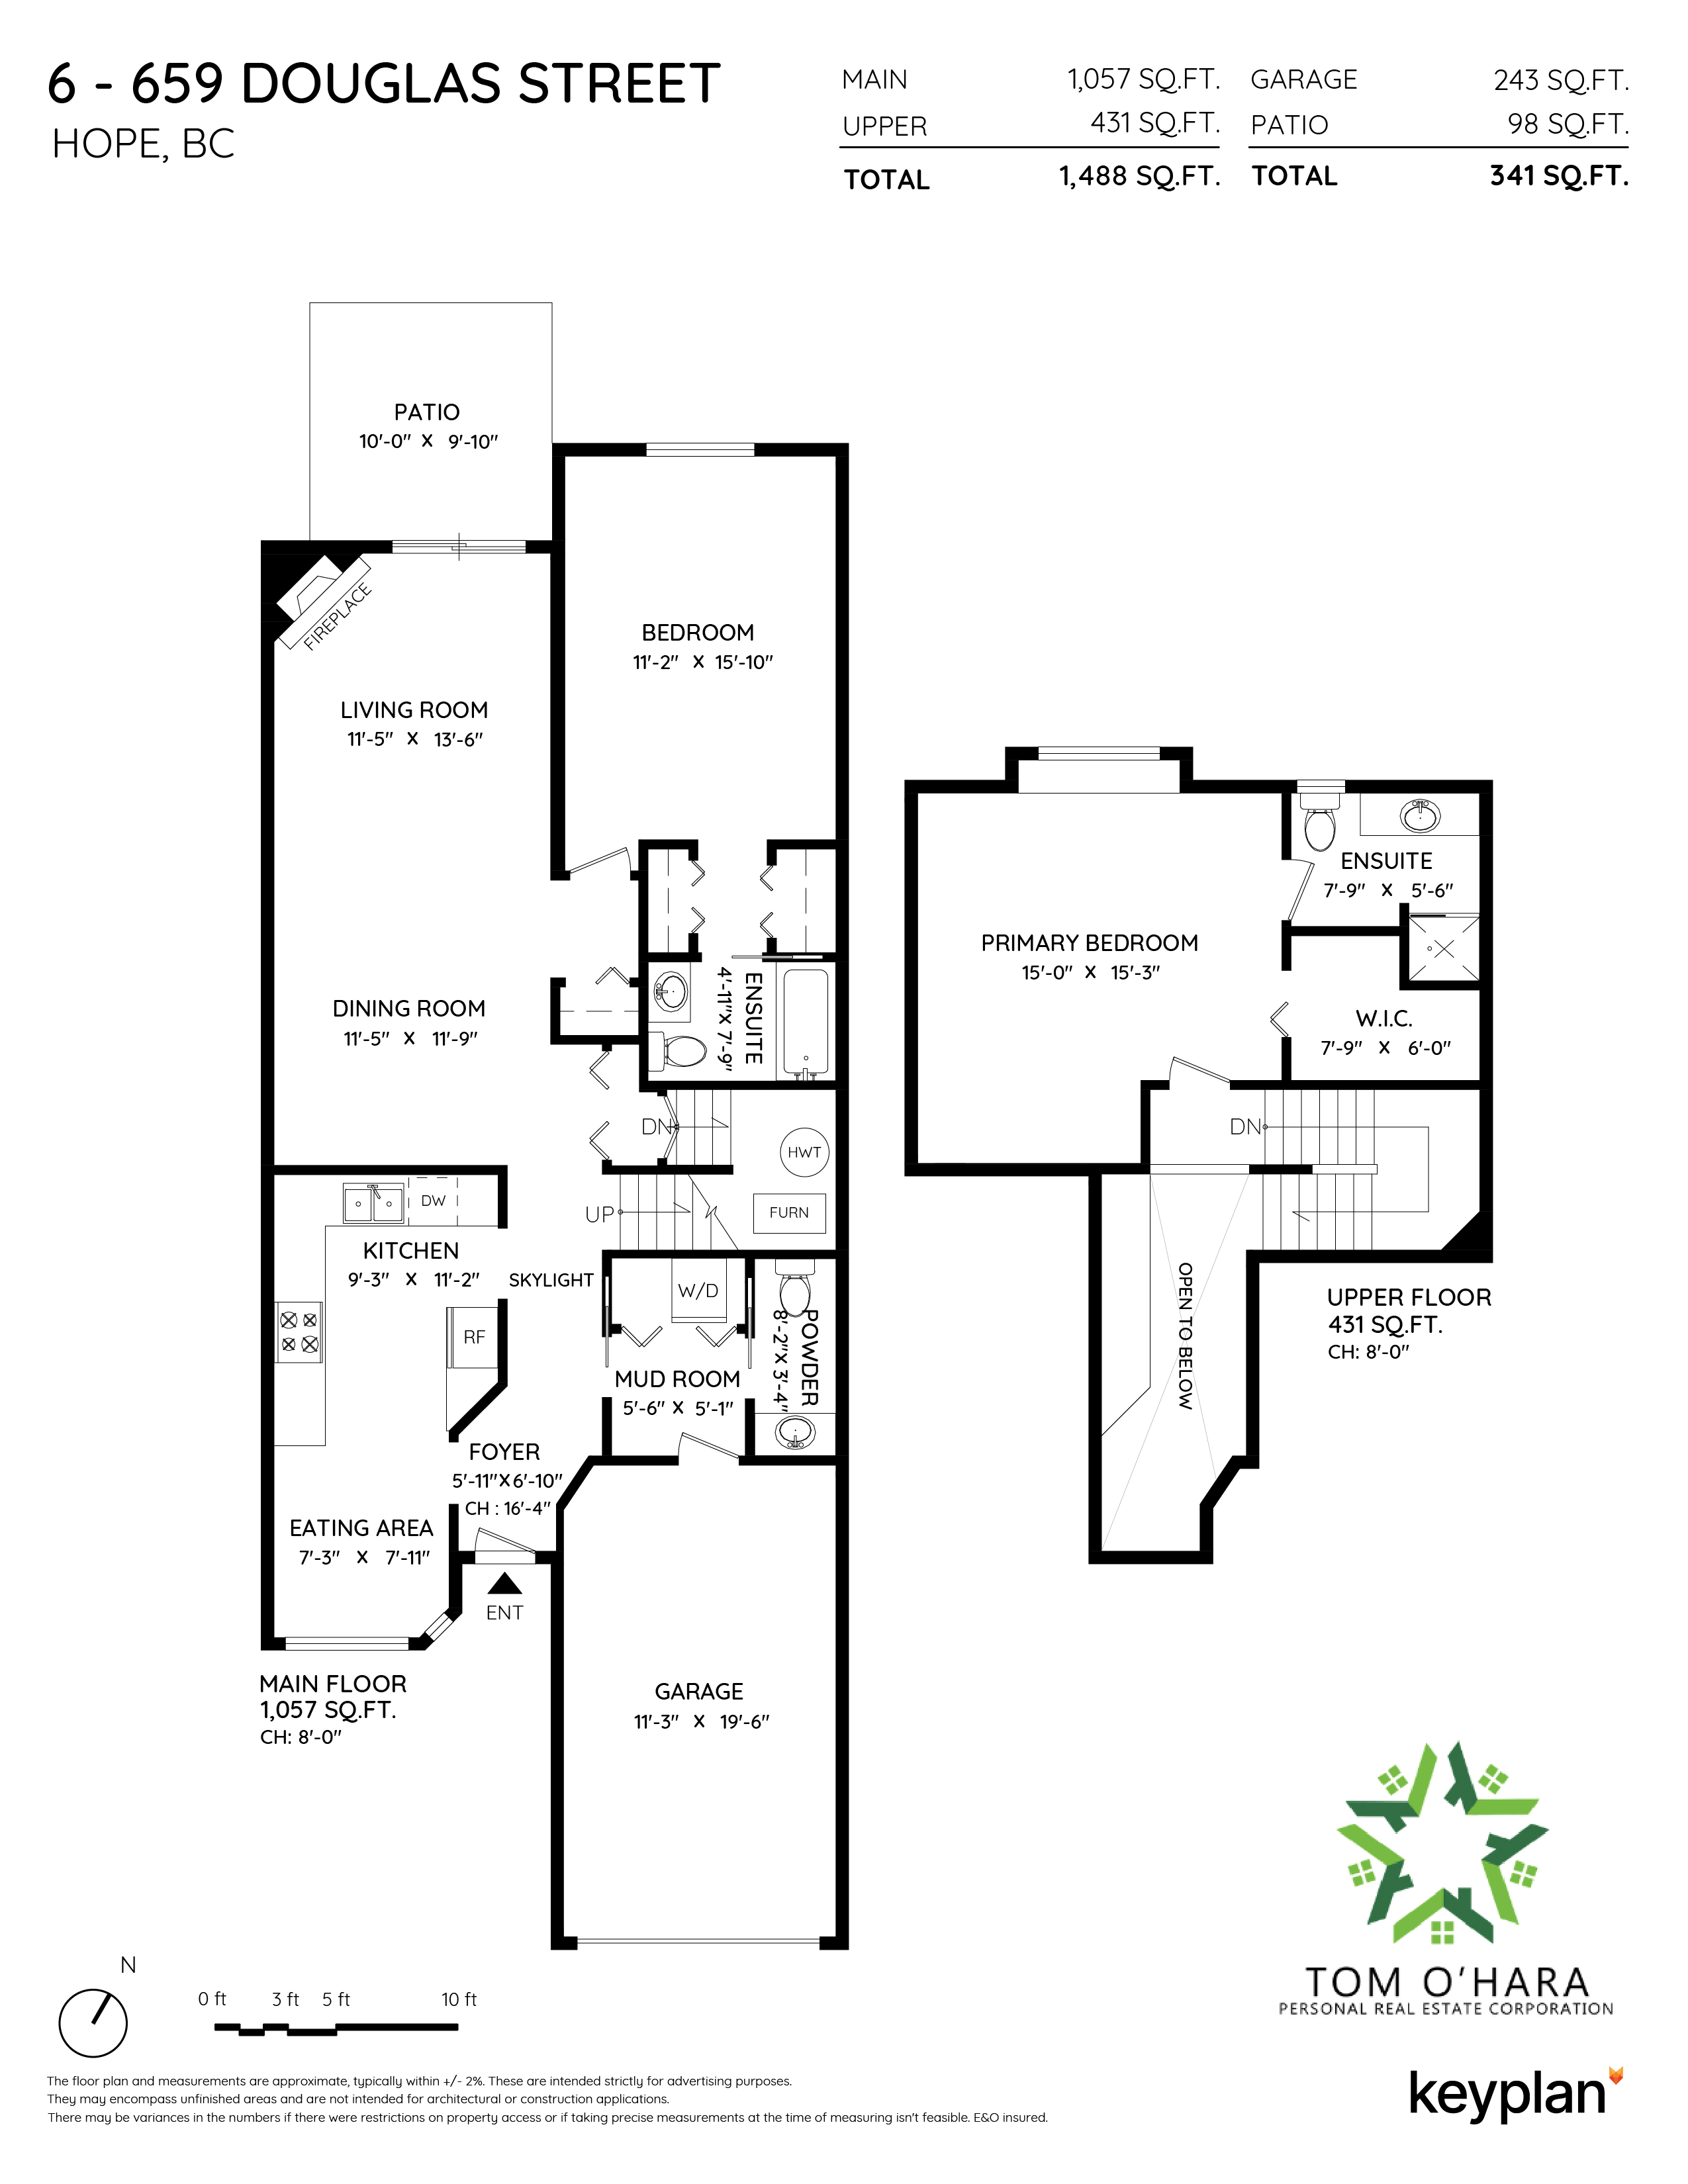 Tom O'Hara - Unit 6 - 659 Douglas Street, Hope, BC, Canada | Floor Plan 1